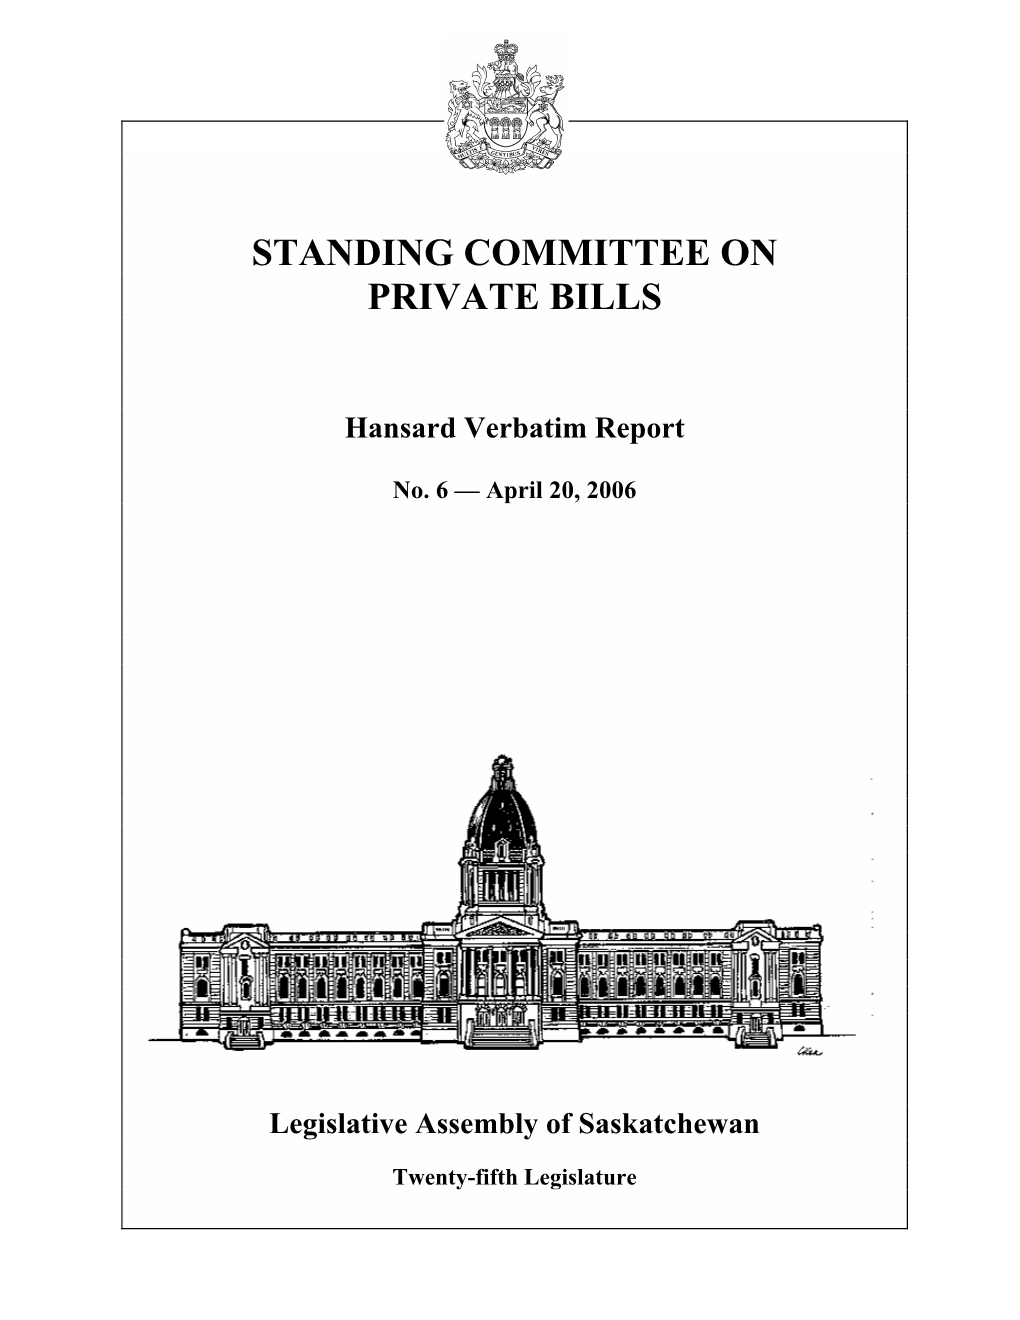 April 20, 2006 Private Bills Committee 25